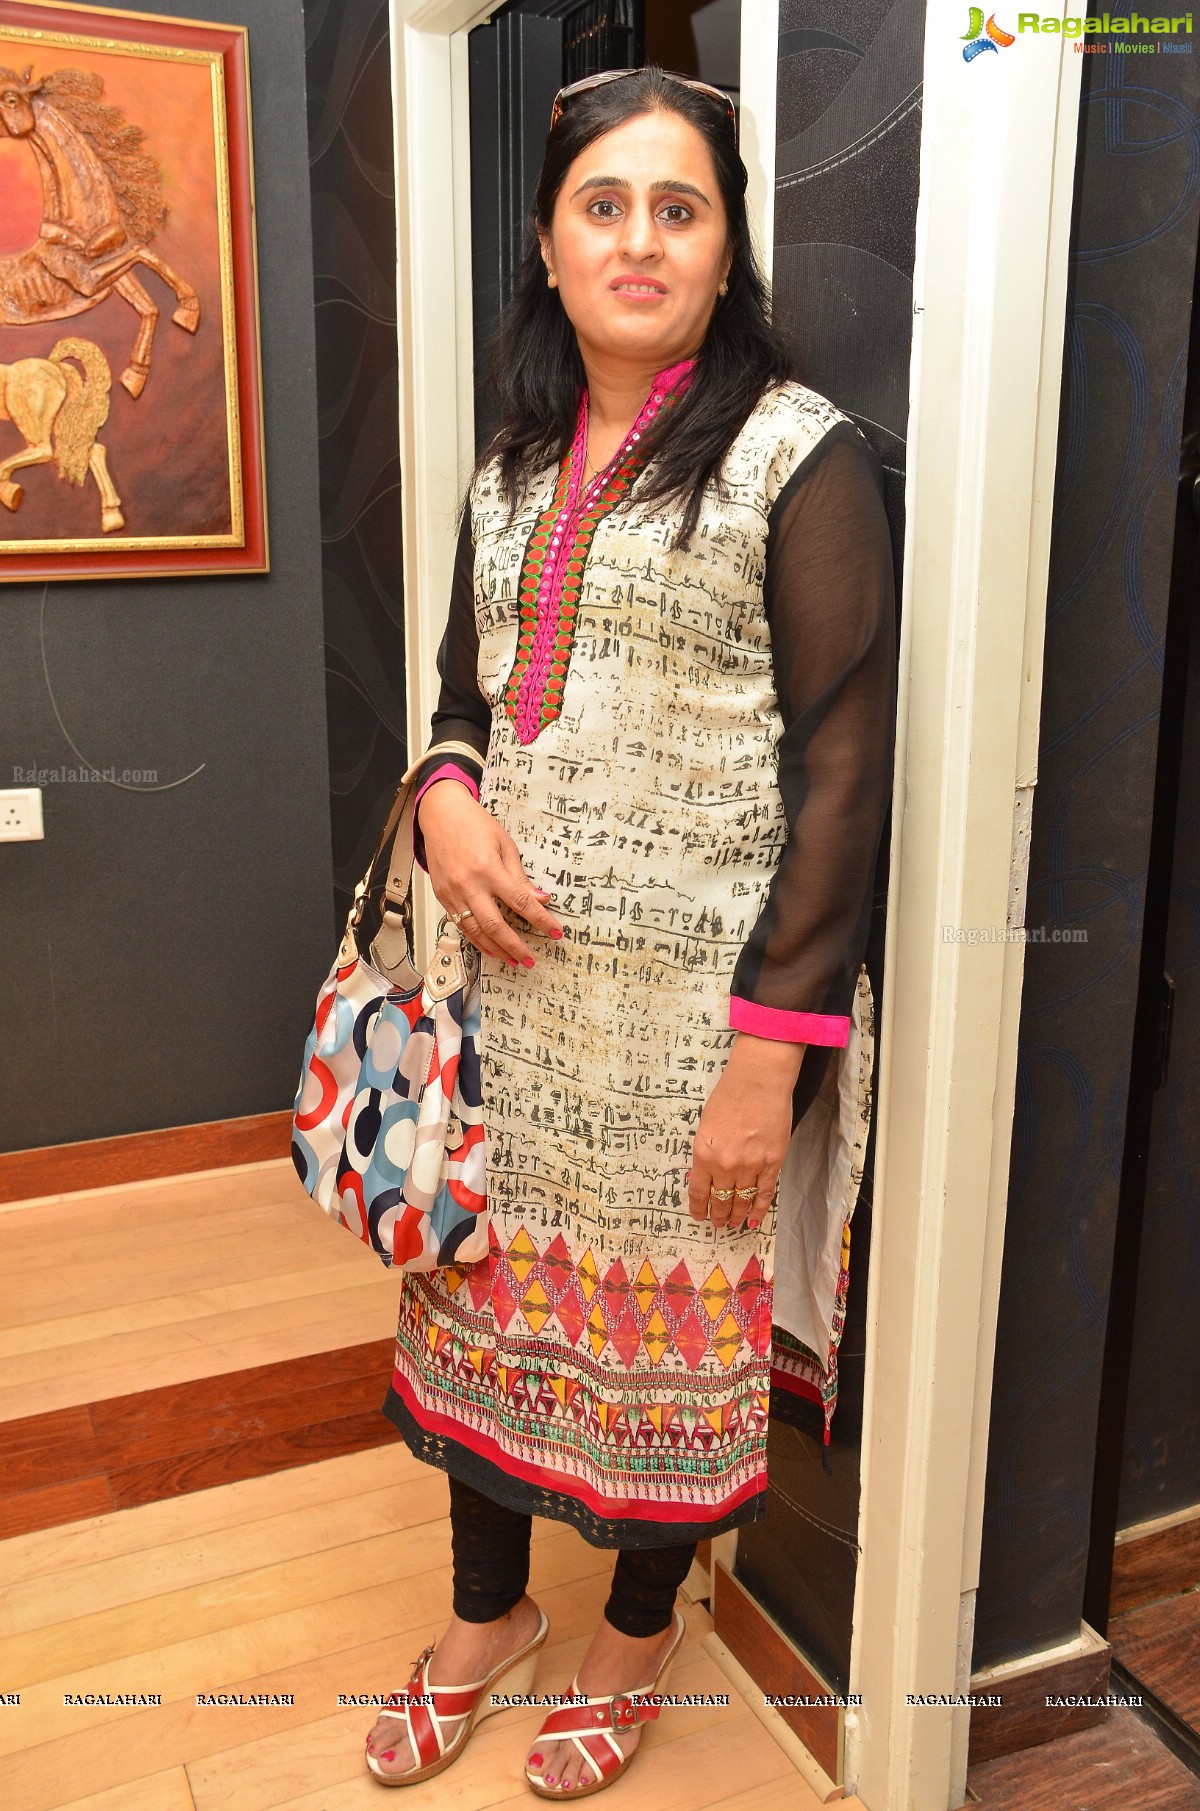 Diamond Jewellery Exhibition by Shalini Modani and Deepika Sharda at Izz Gallerie Space, Hyderabad